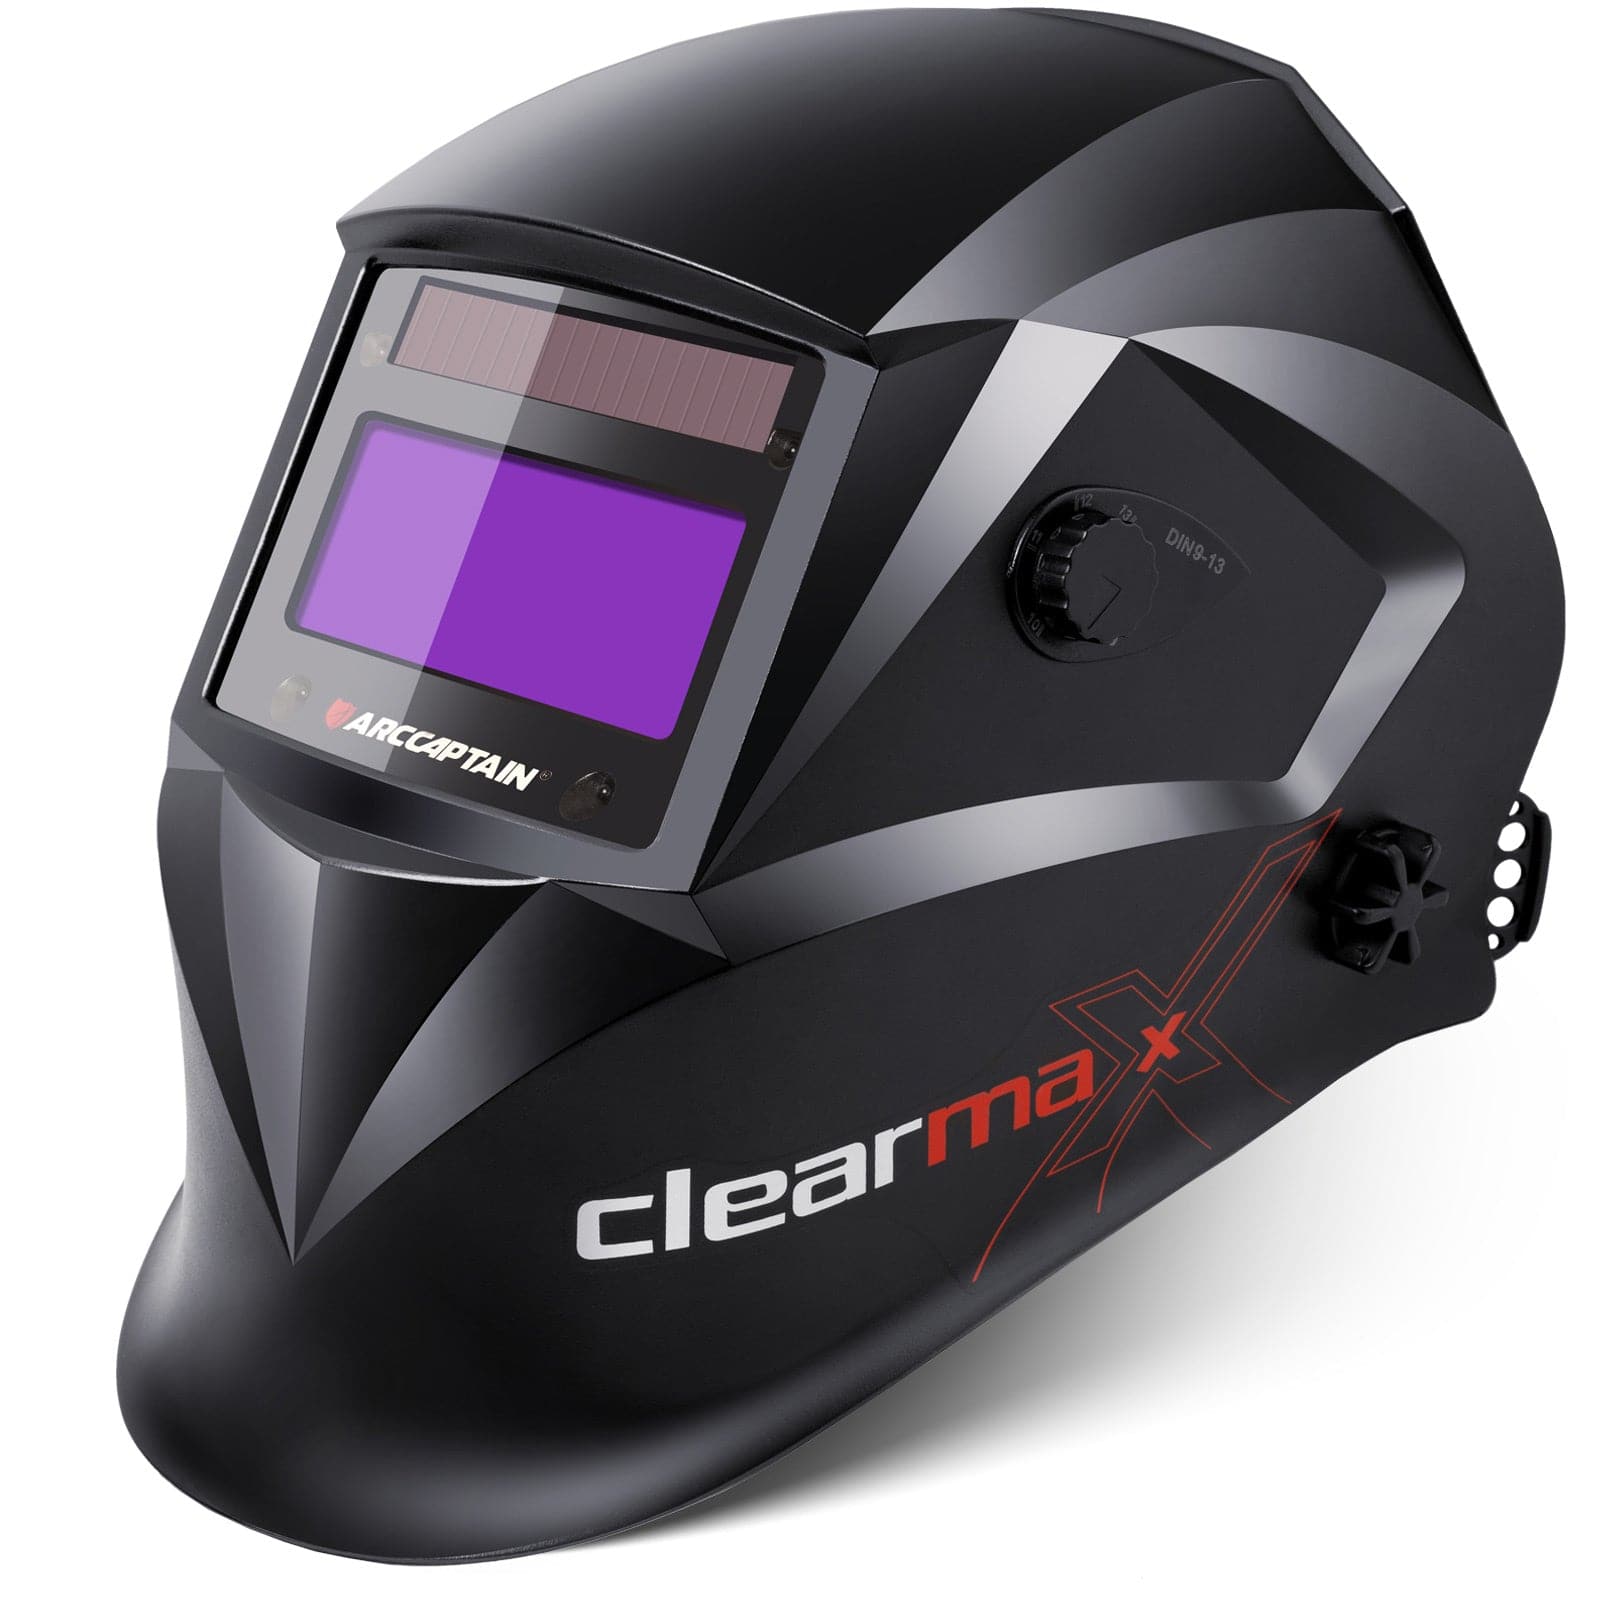 ARCCAPTAIN Digital Auto Darkening Welding Helmet with Sensitivity Adjustment